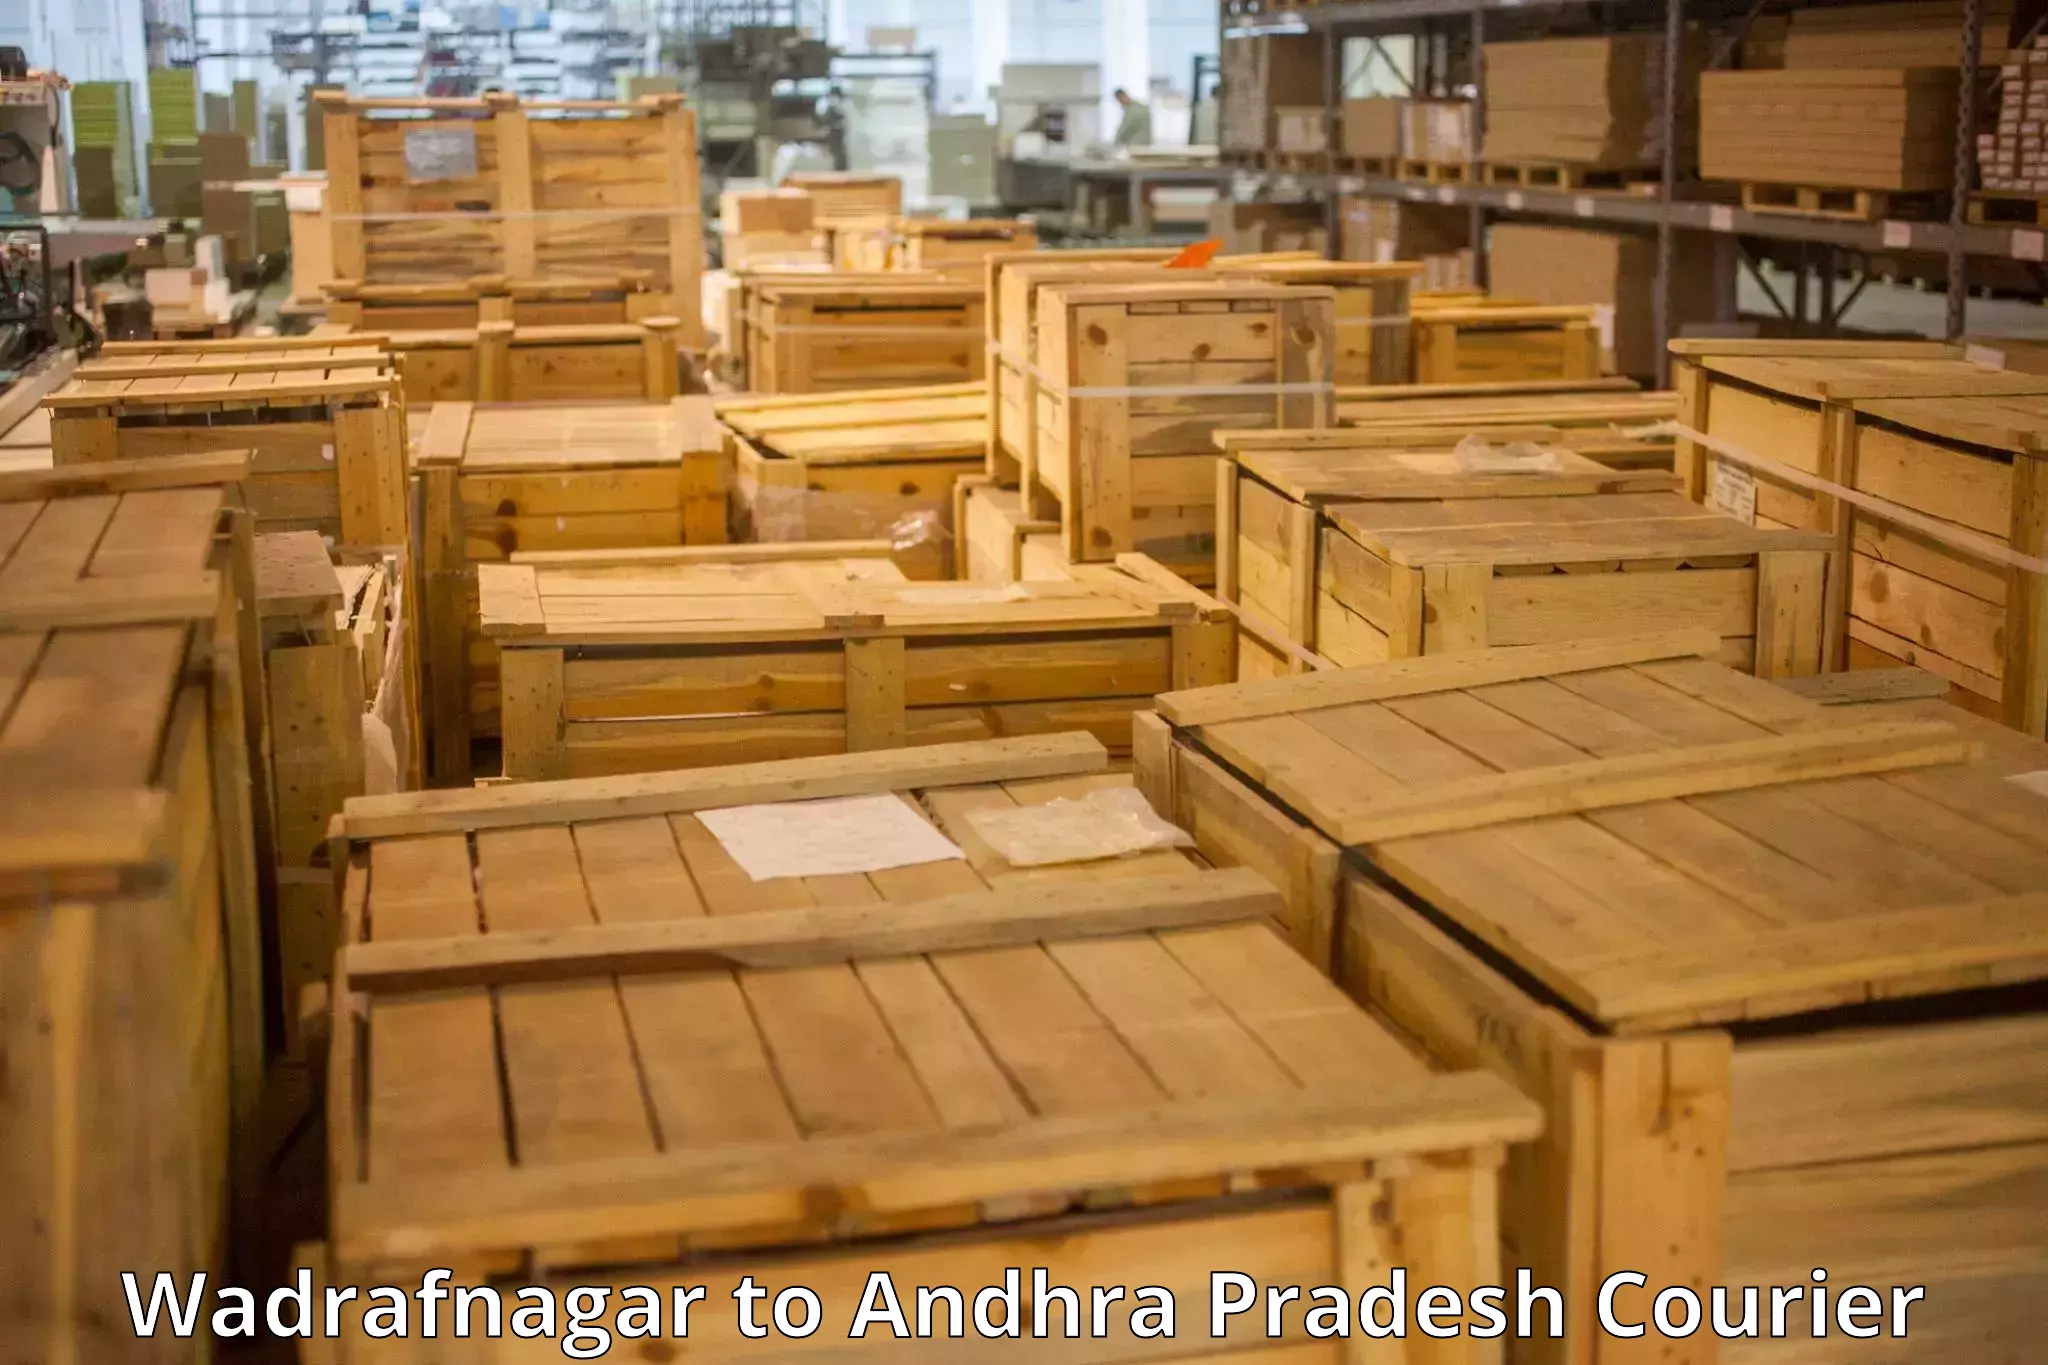 Luggage transport consulting Wadrafnagar to Koduru